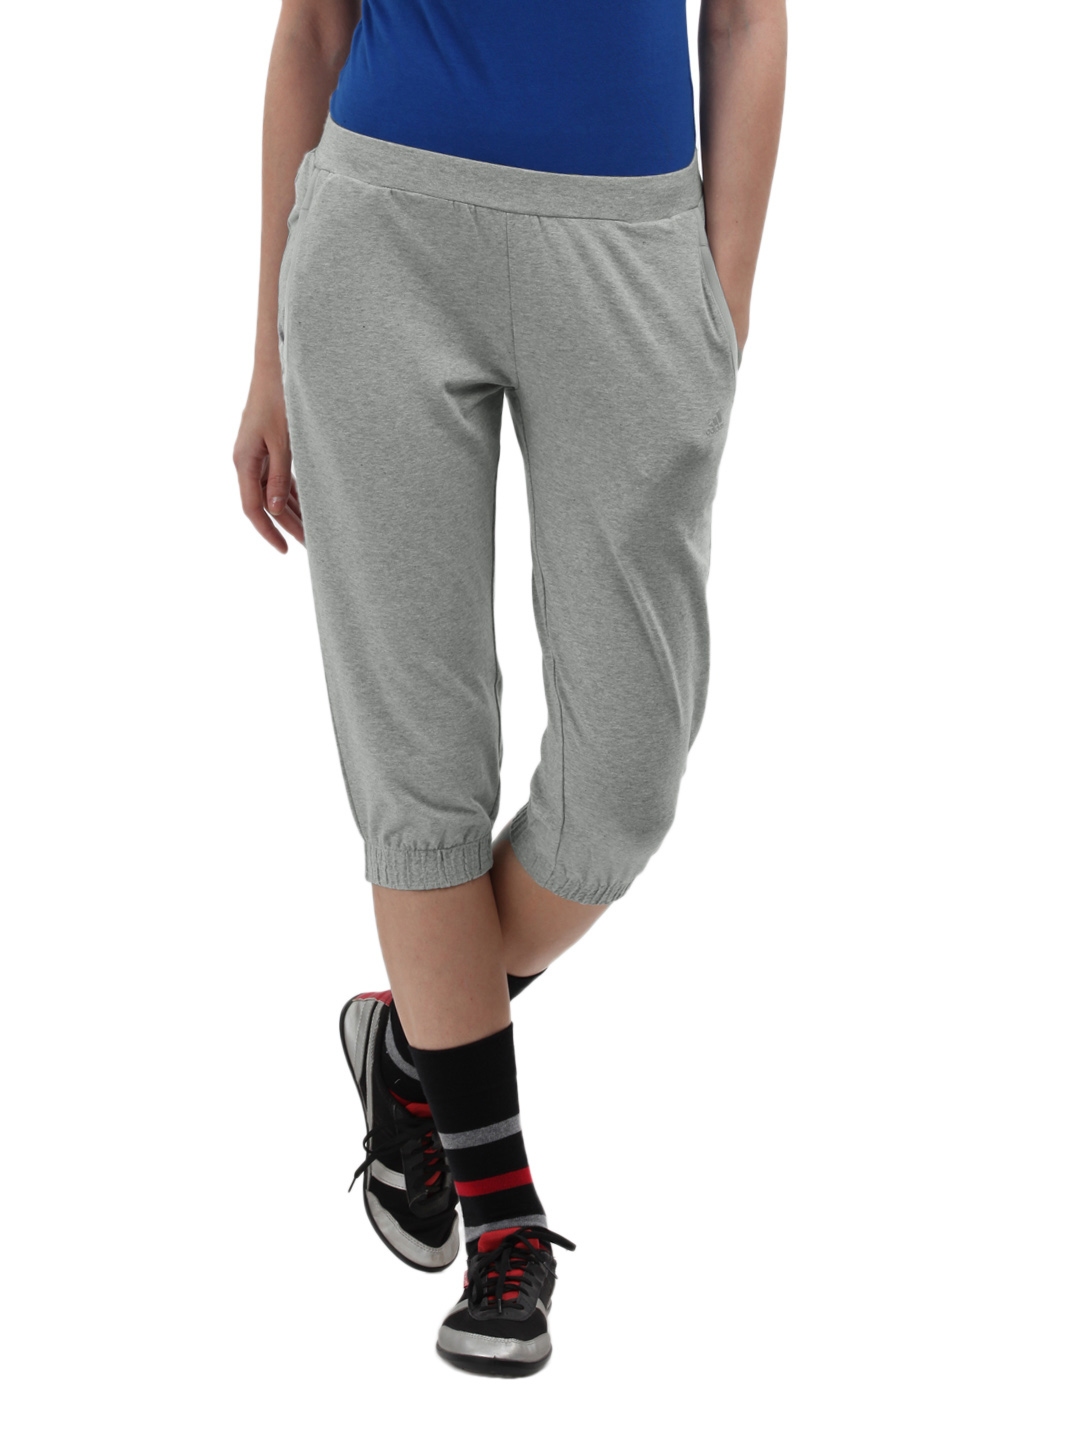 Adidas Women's Capri Track Pants